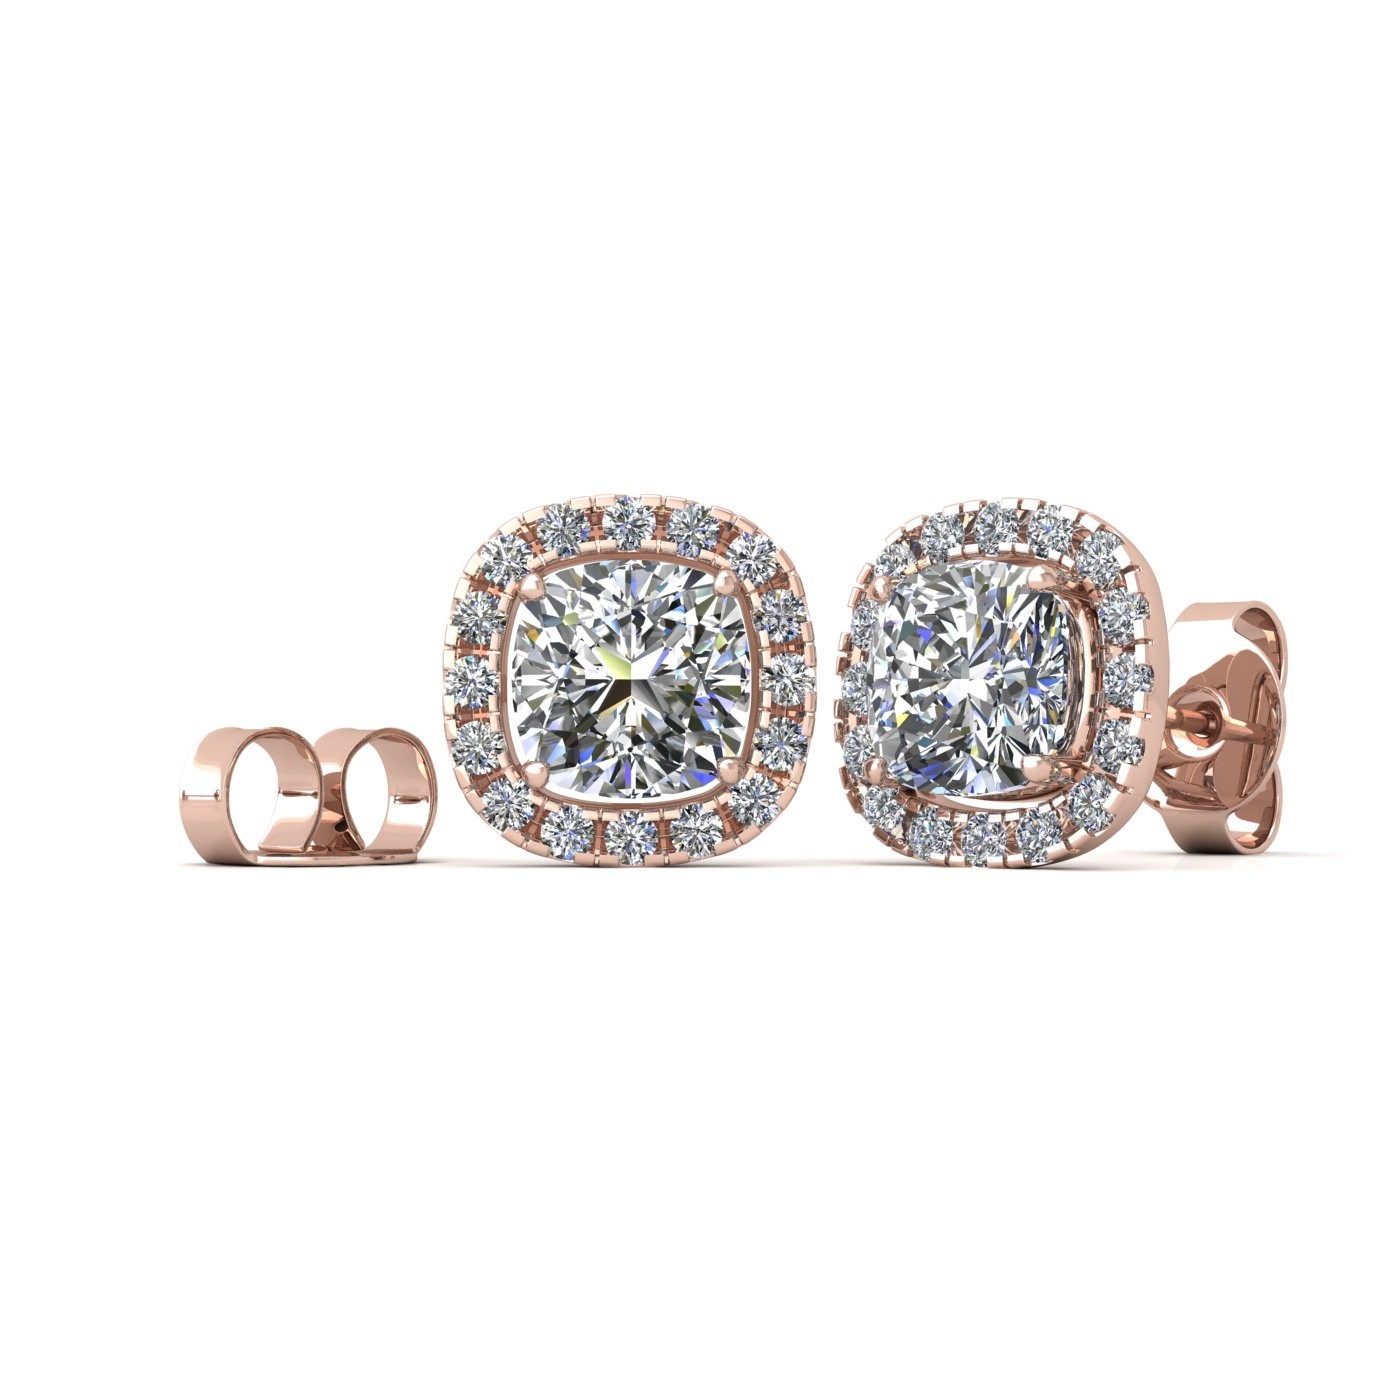 18k rose gold  1,0 ct each (2,0 tcw) 4 prongs cushion shape diamond earrings with diamond pavÉ set halo Photos & images